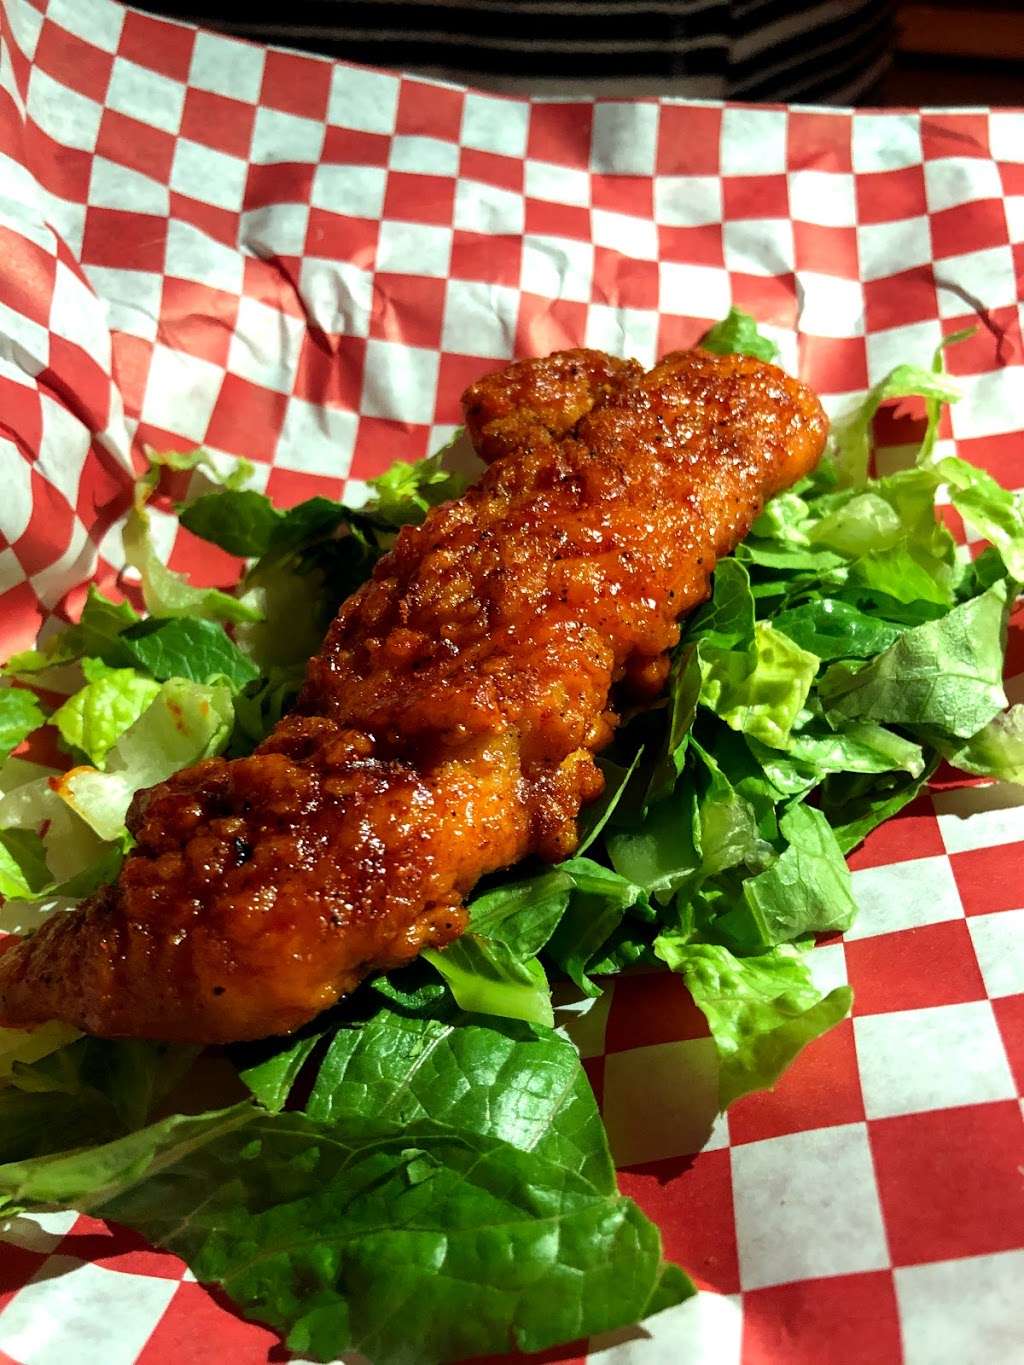 Hot Fried Chicken To Go | 2517 Cañada Blvd, Glendale, CA 91208 | Phone: (818) 791-0707